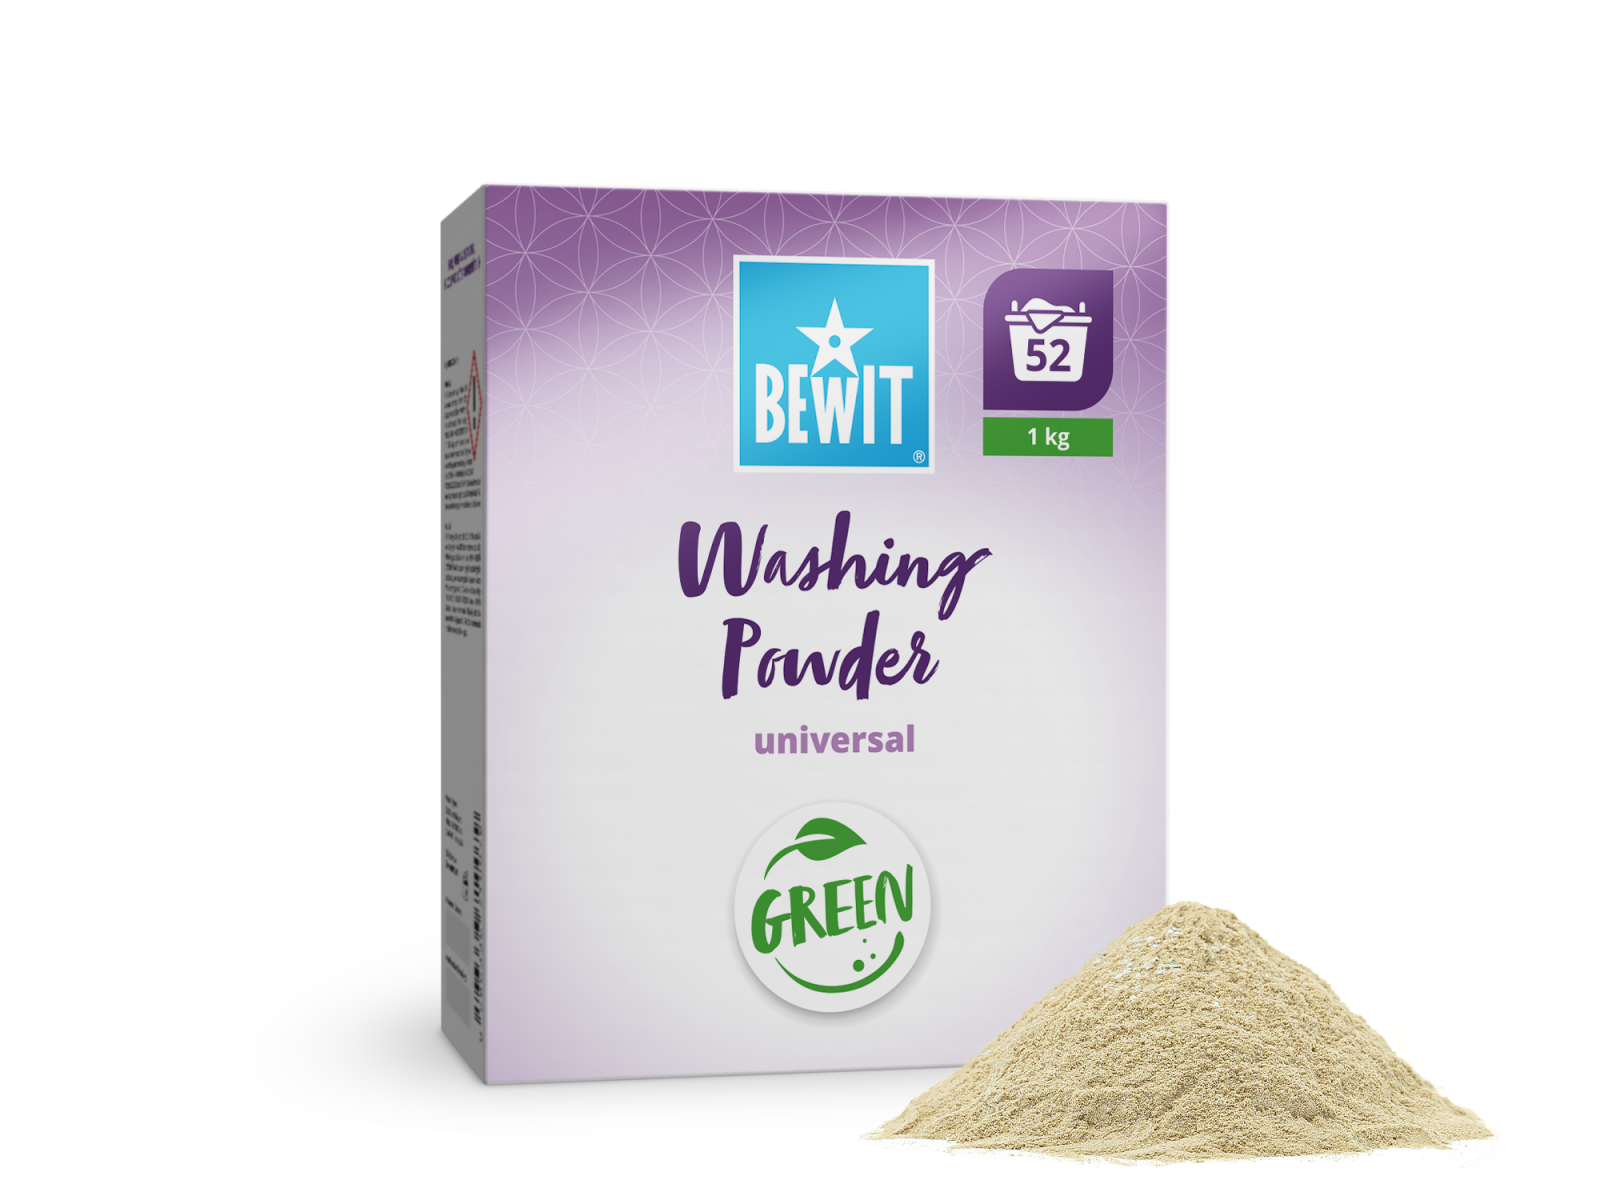 BEWIT Washing Powder Universal - Universal laundry detergent - 3